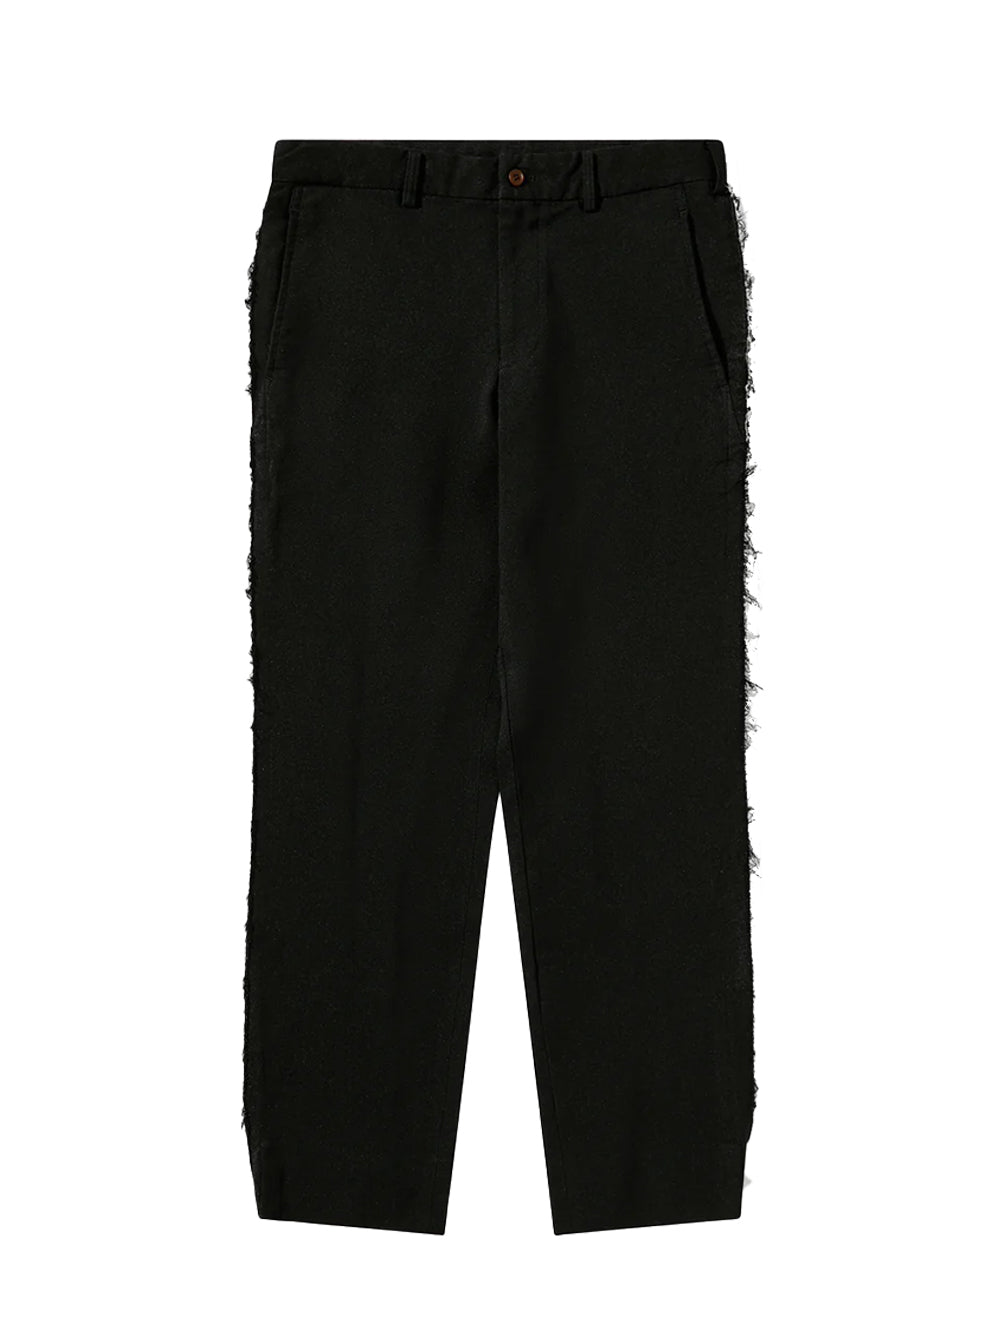 Raw Side Seam Trousers (Black)